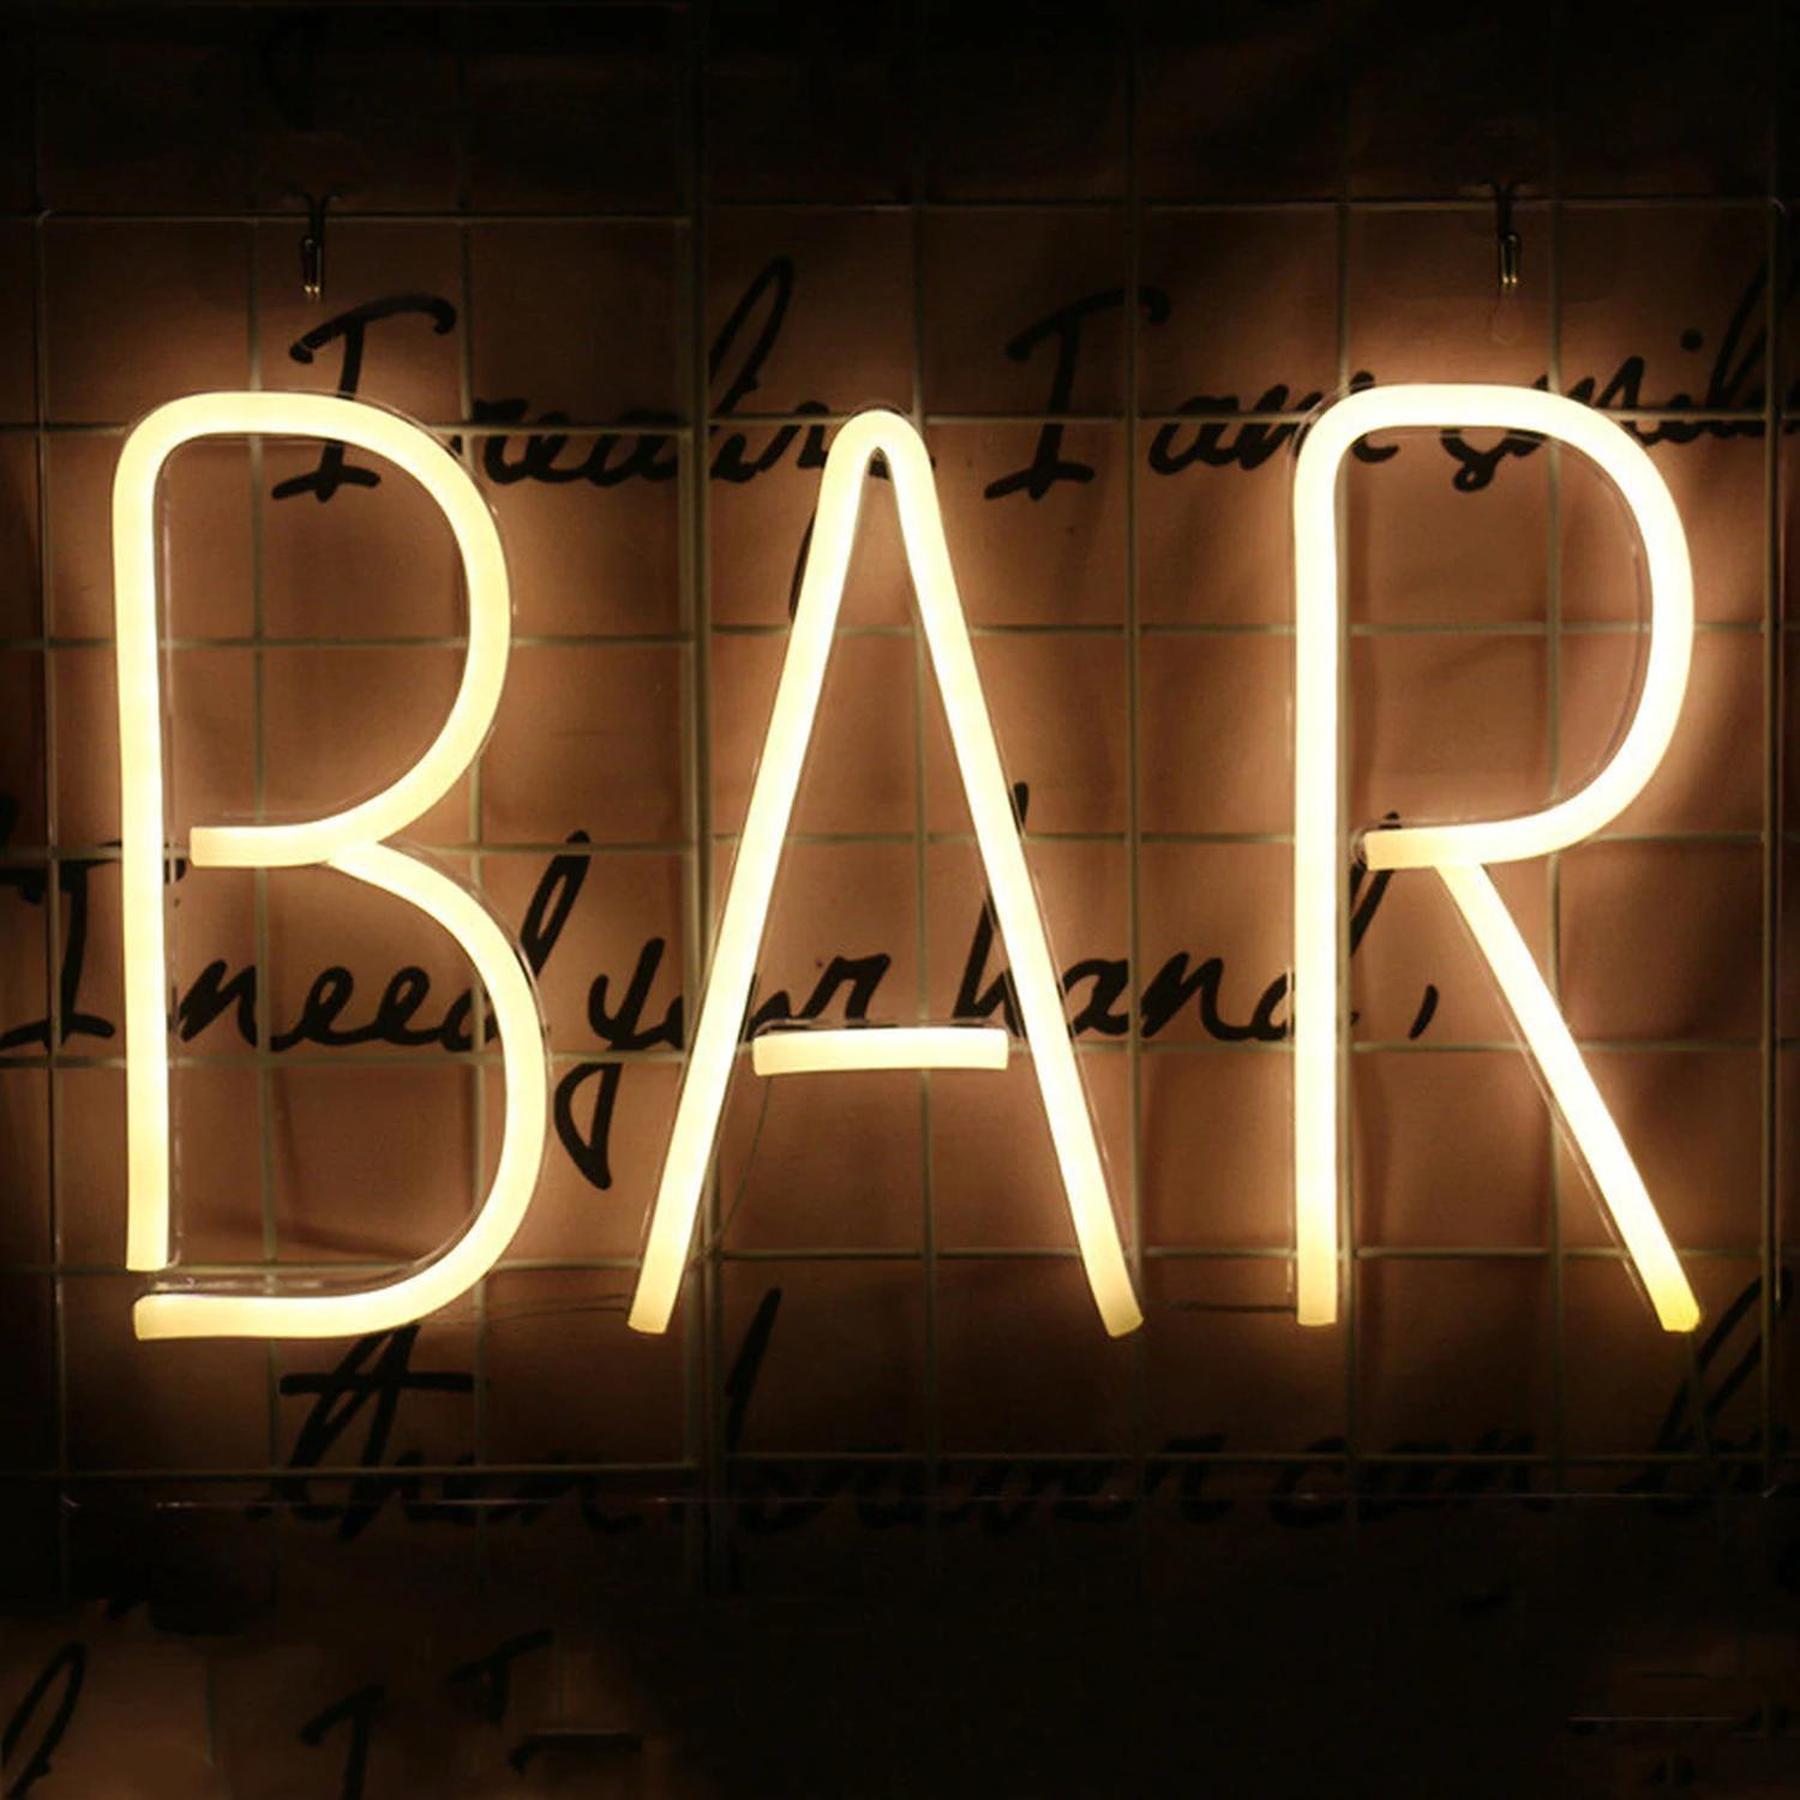 NEON LED Licht, dekorative Wand-Leuchte, 30 x cm Bar, 2 x ca. 40